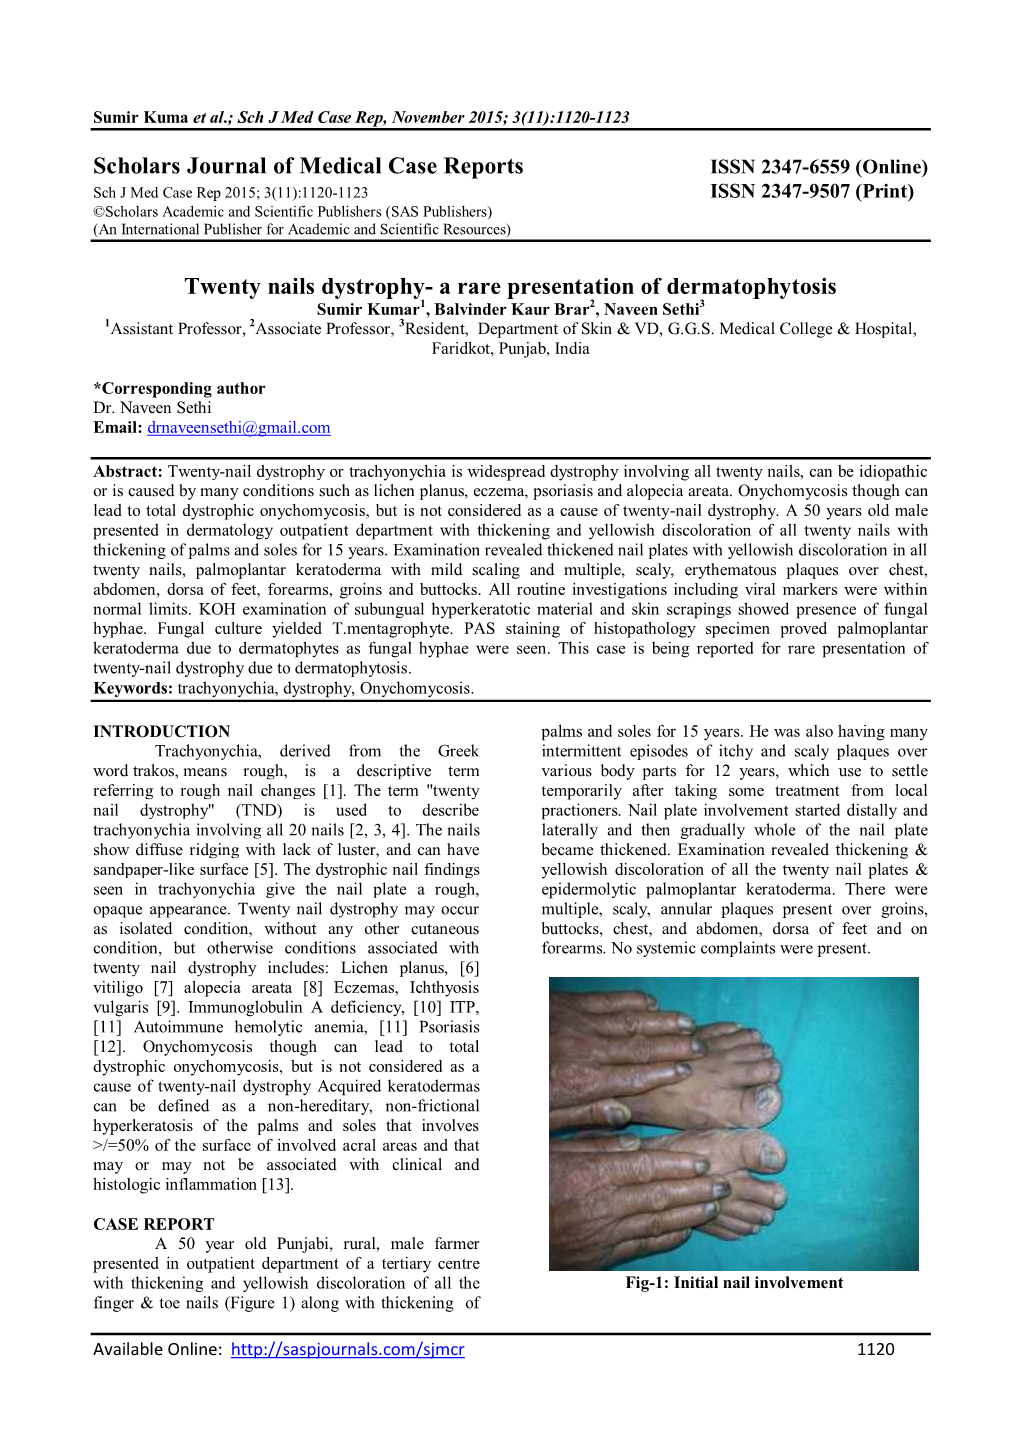 Scholars Journal of Medical Case Reports Twenty Nails Dystrophy- a Rare Presentation of Dermatophytosis